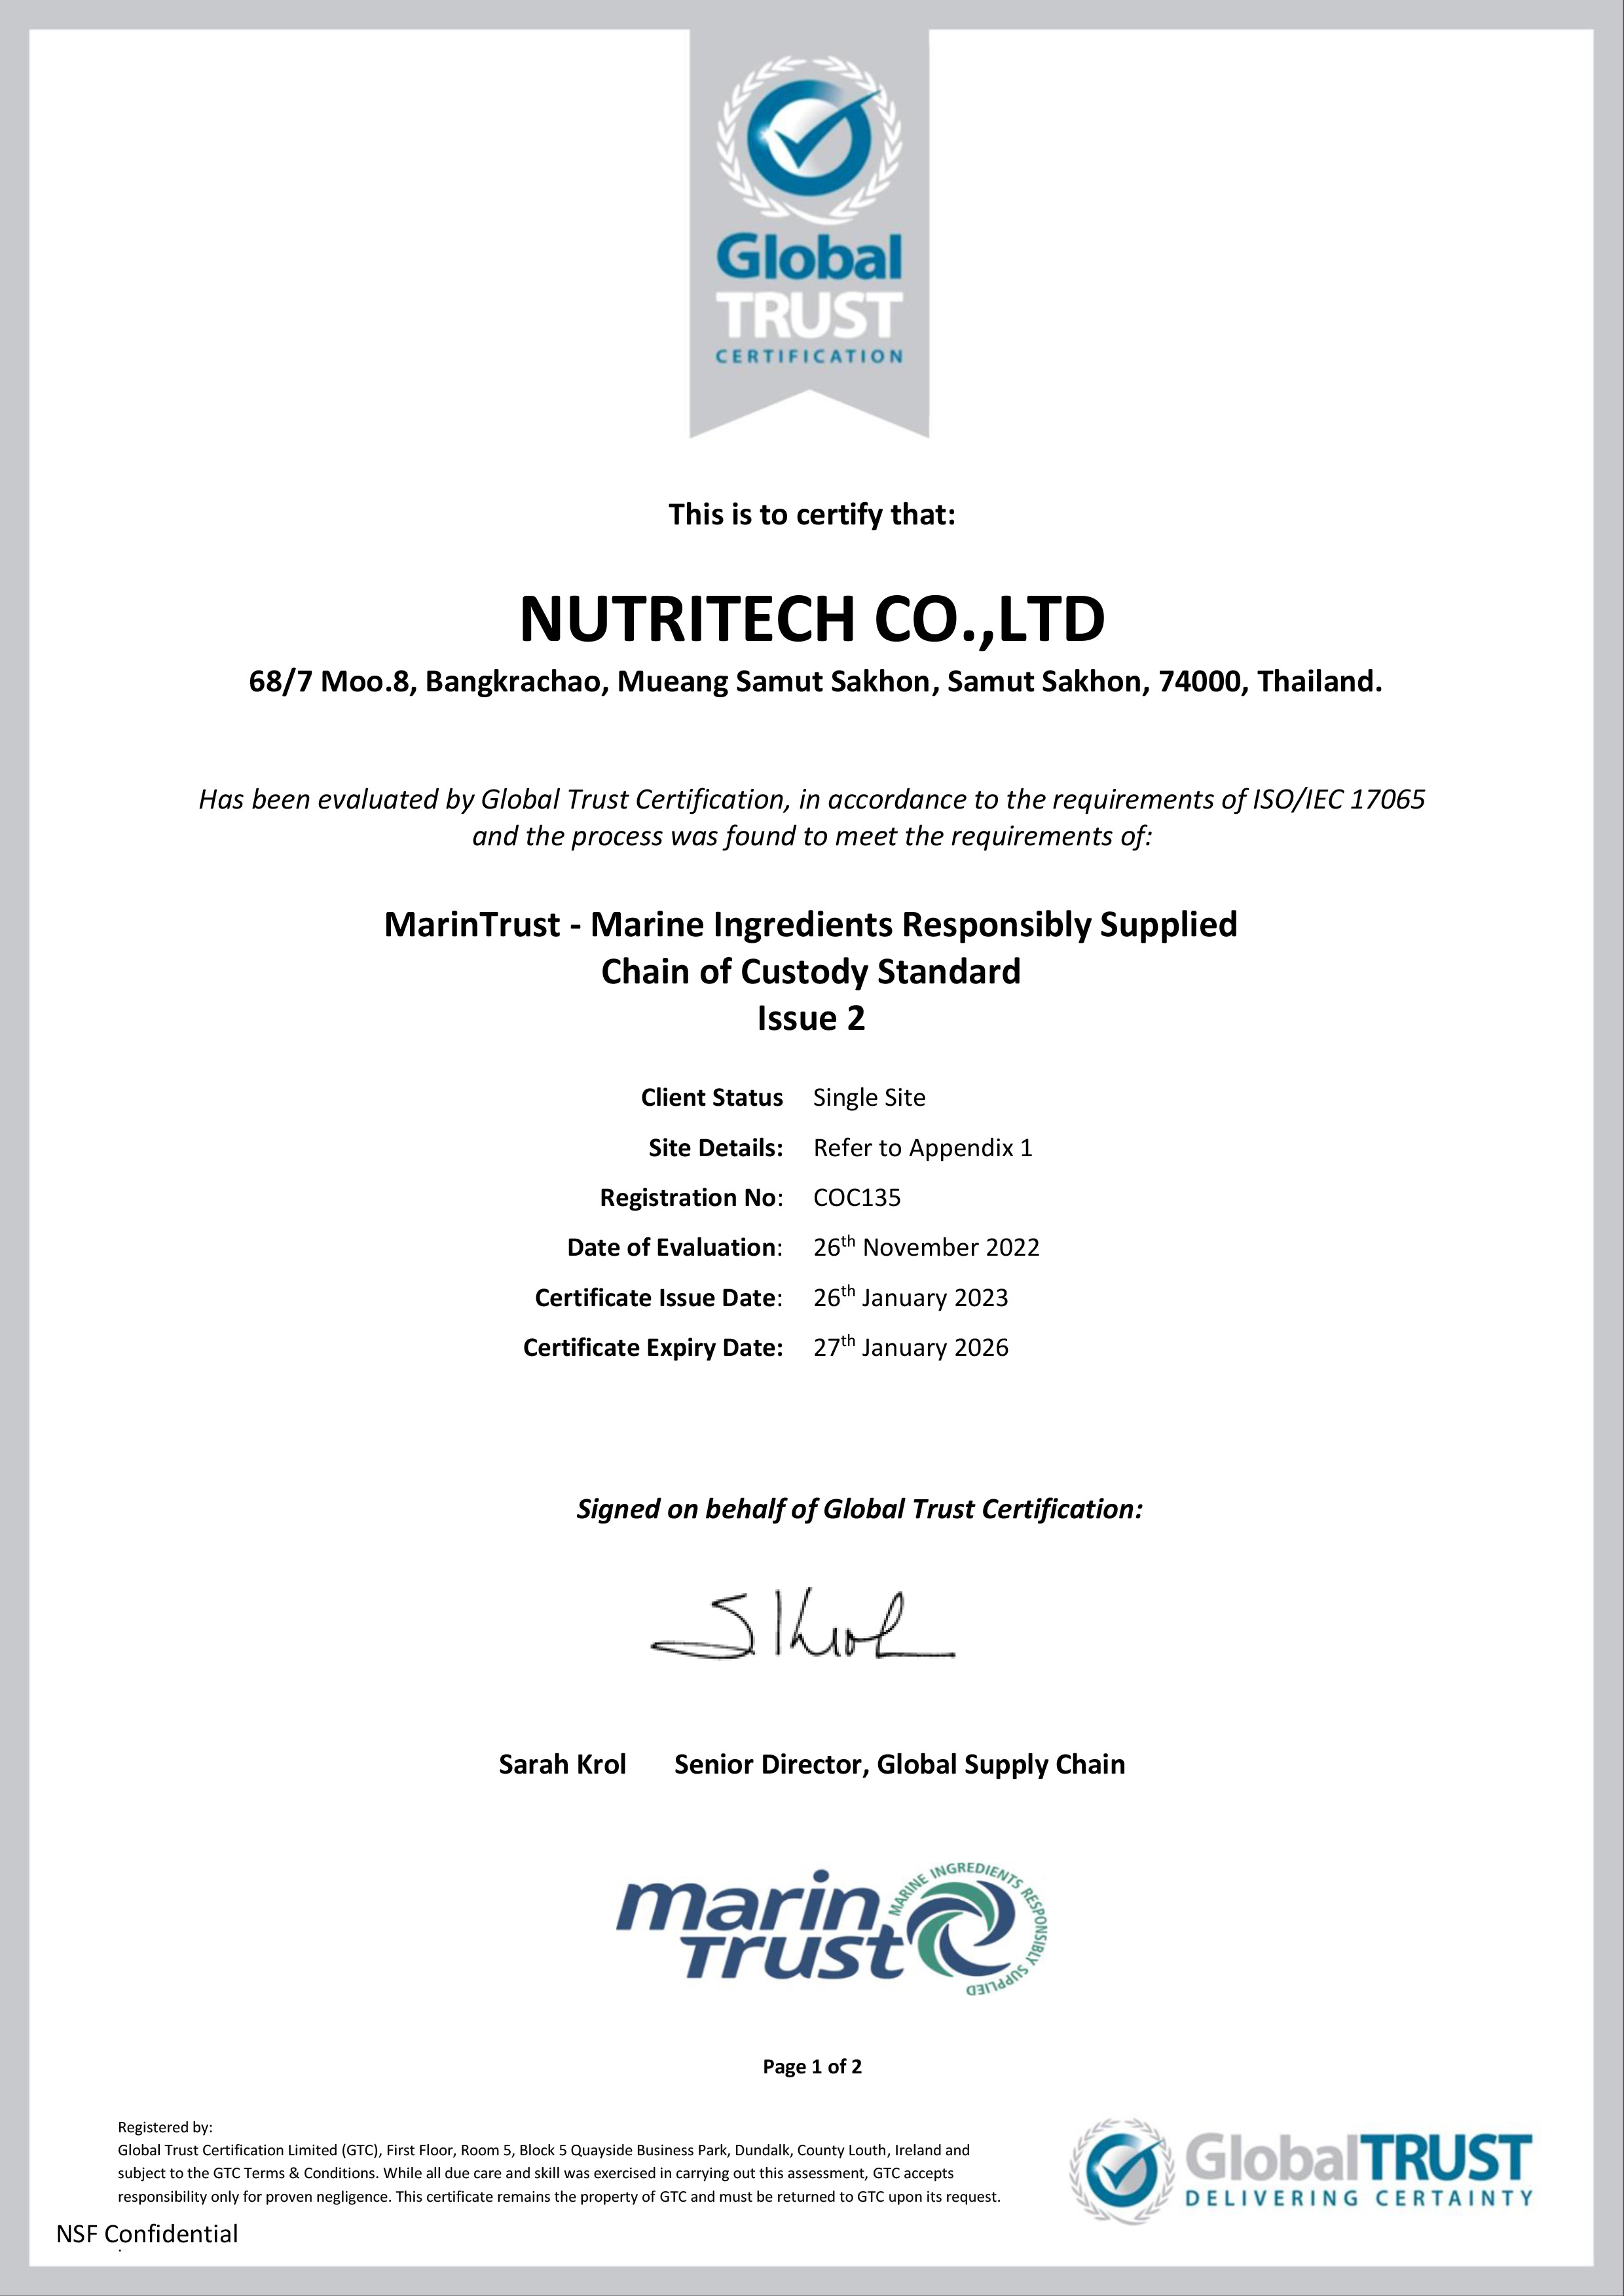 marin trust approval certification